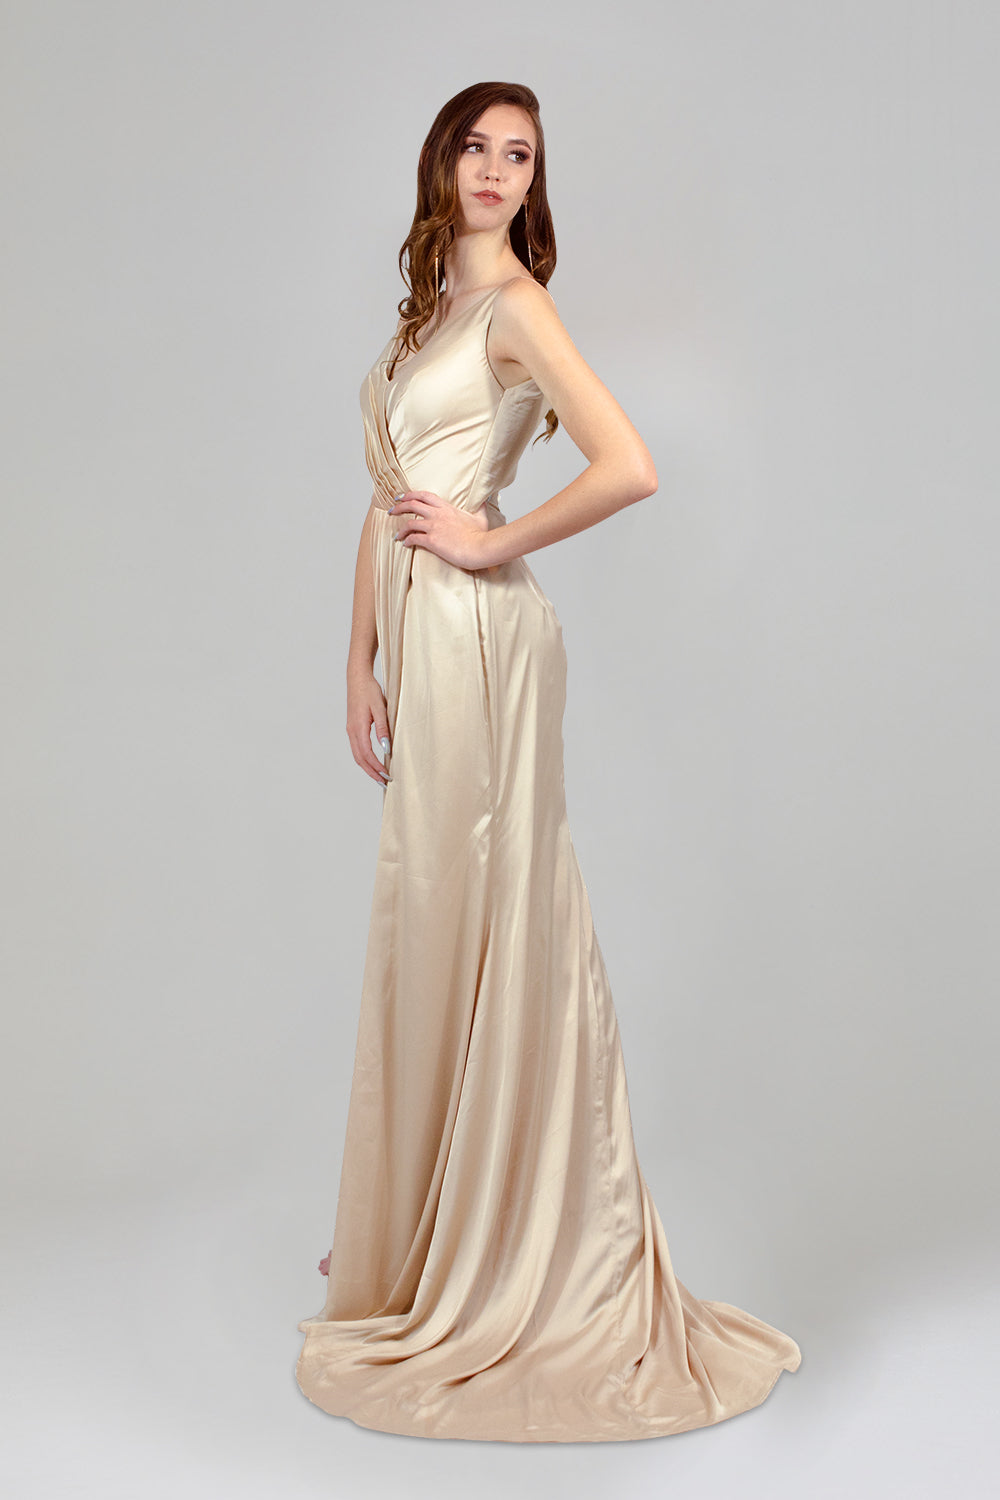 Gold Maxi Dress - Gold Satin Dress - One-Shoulder Maxi Dress - Lulus